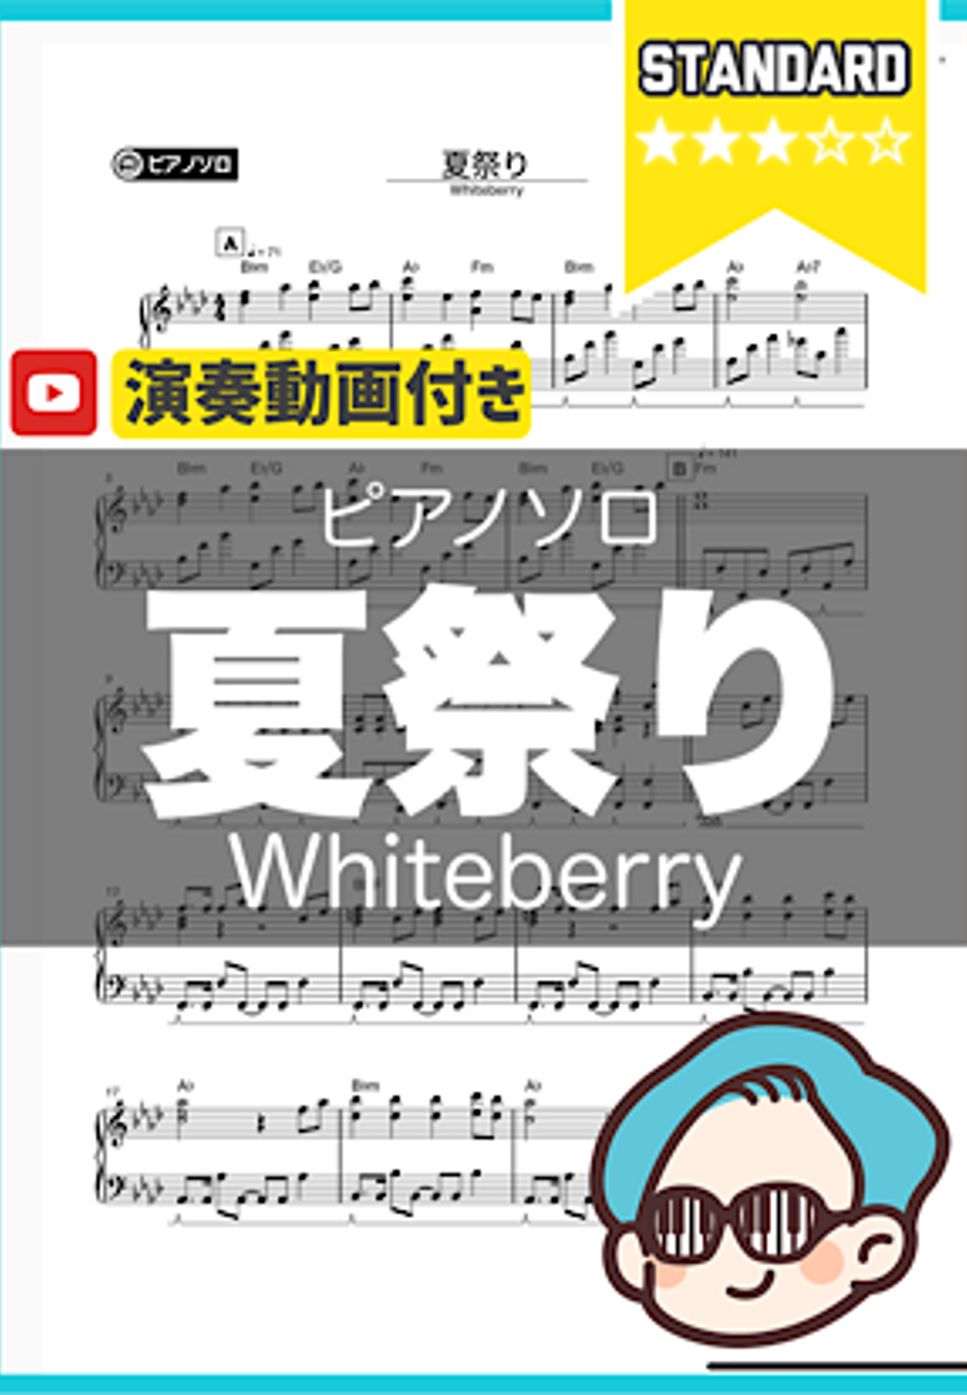 Whiteberry - 夏祭り by シータピアノ